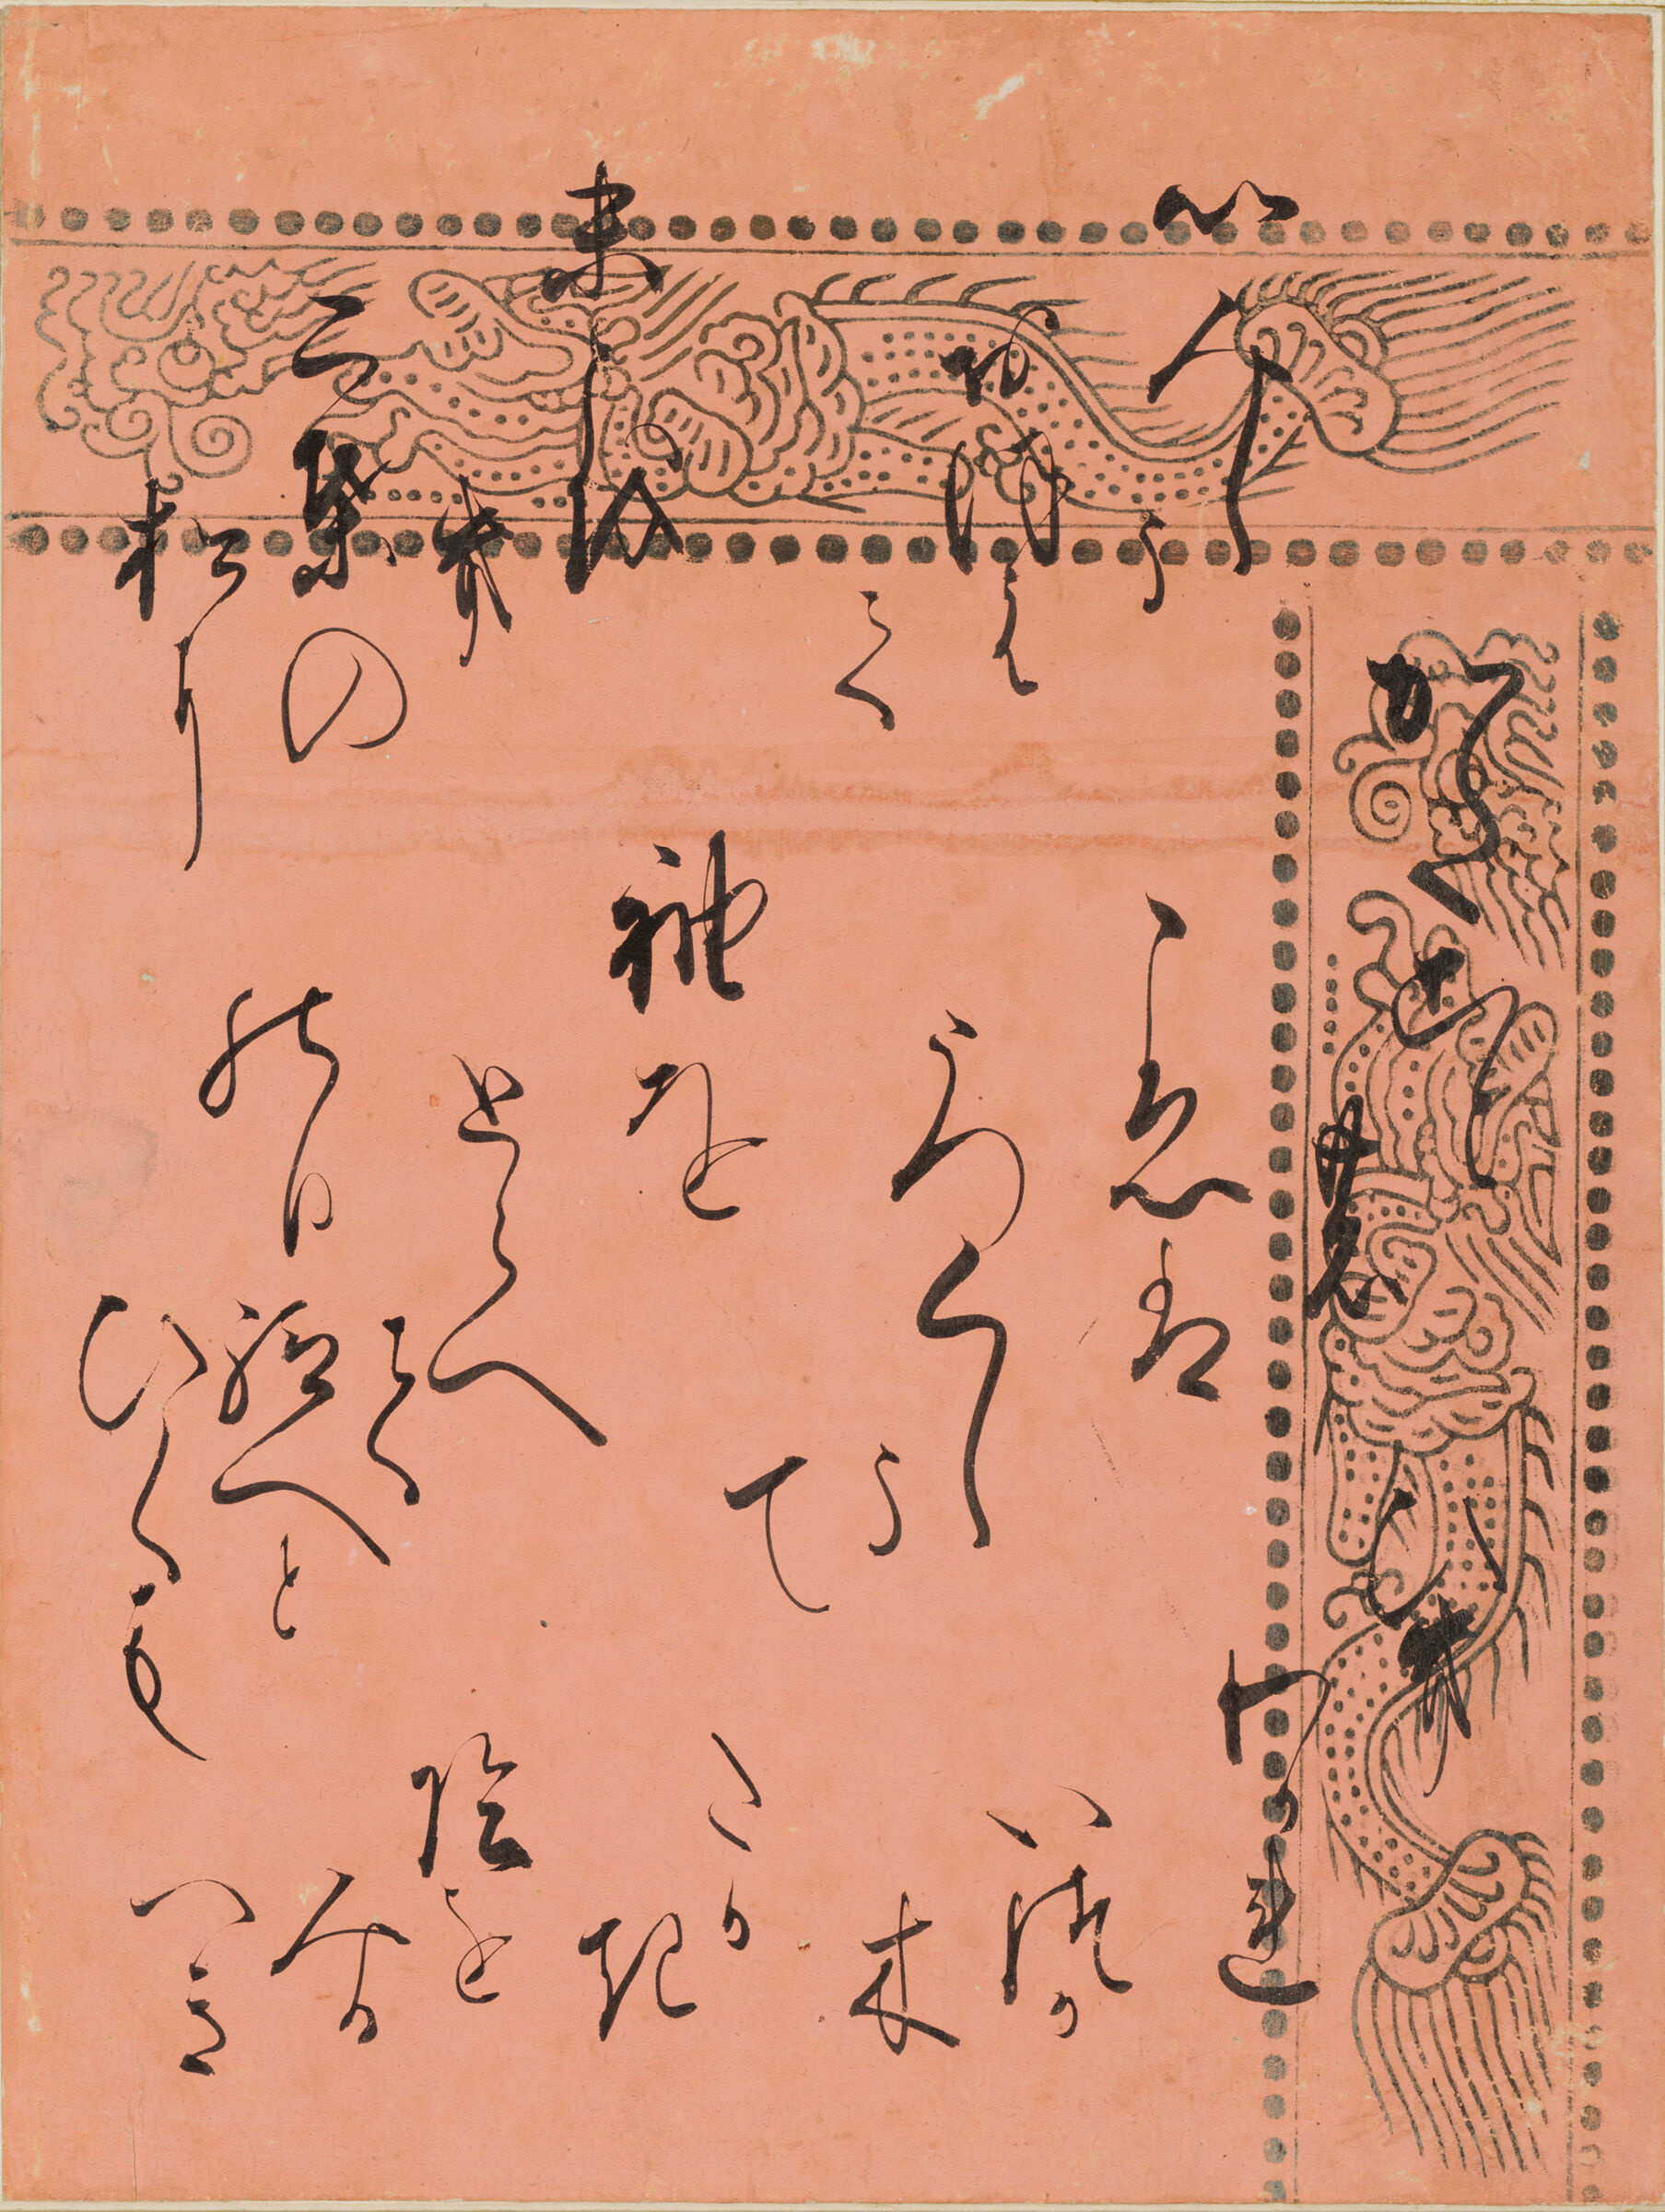 Wisps Of Cloud (Usugumo), Calligraphic Excerpt From Chapter 19 Of The Tale Of Genji (Genji Monogatari)